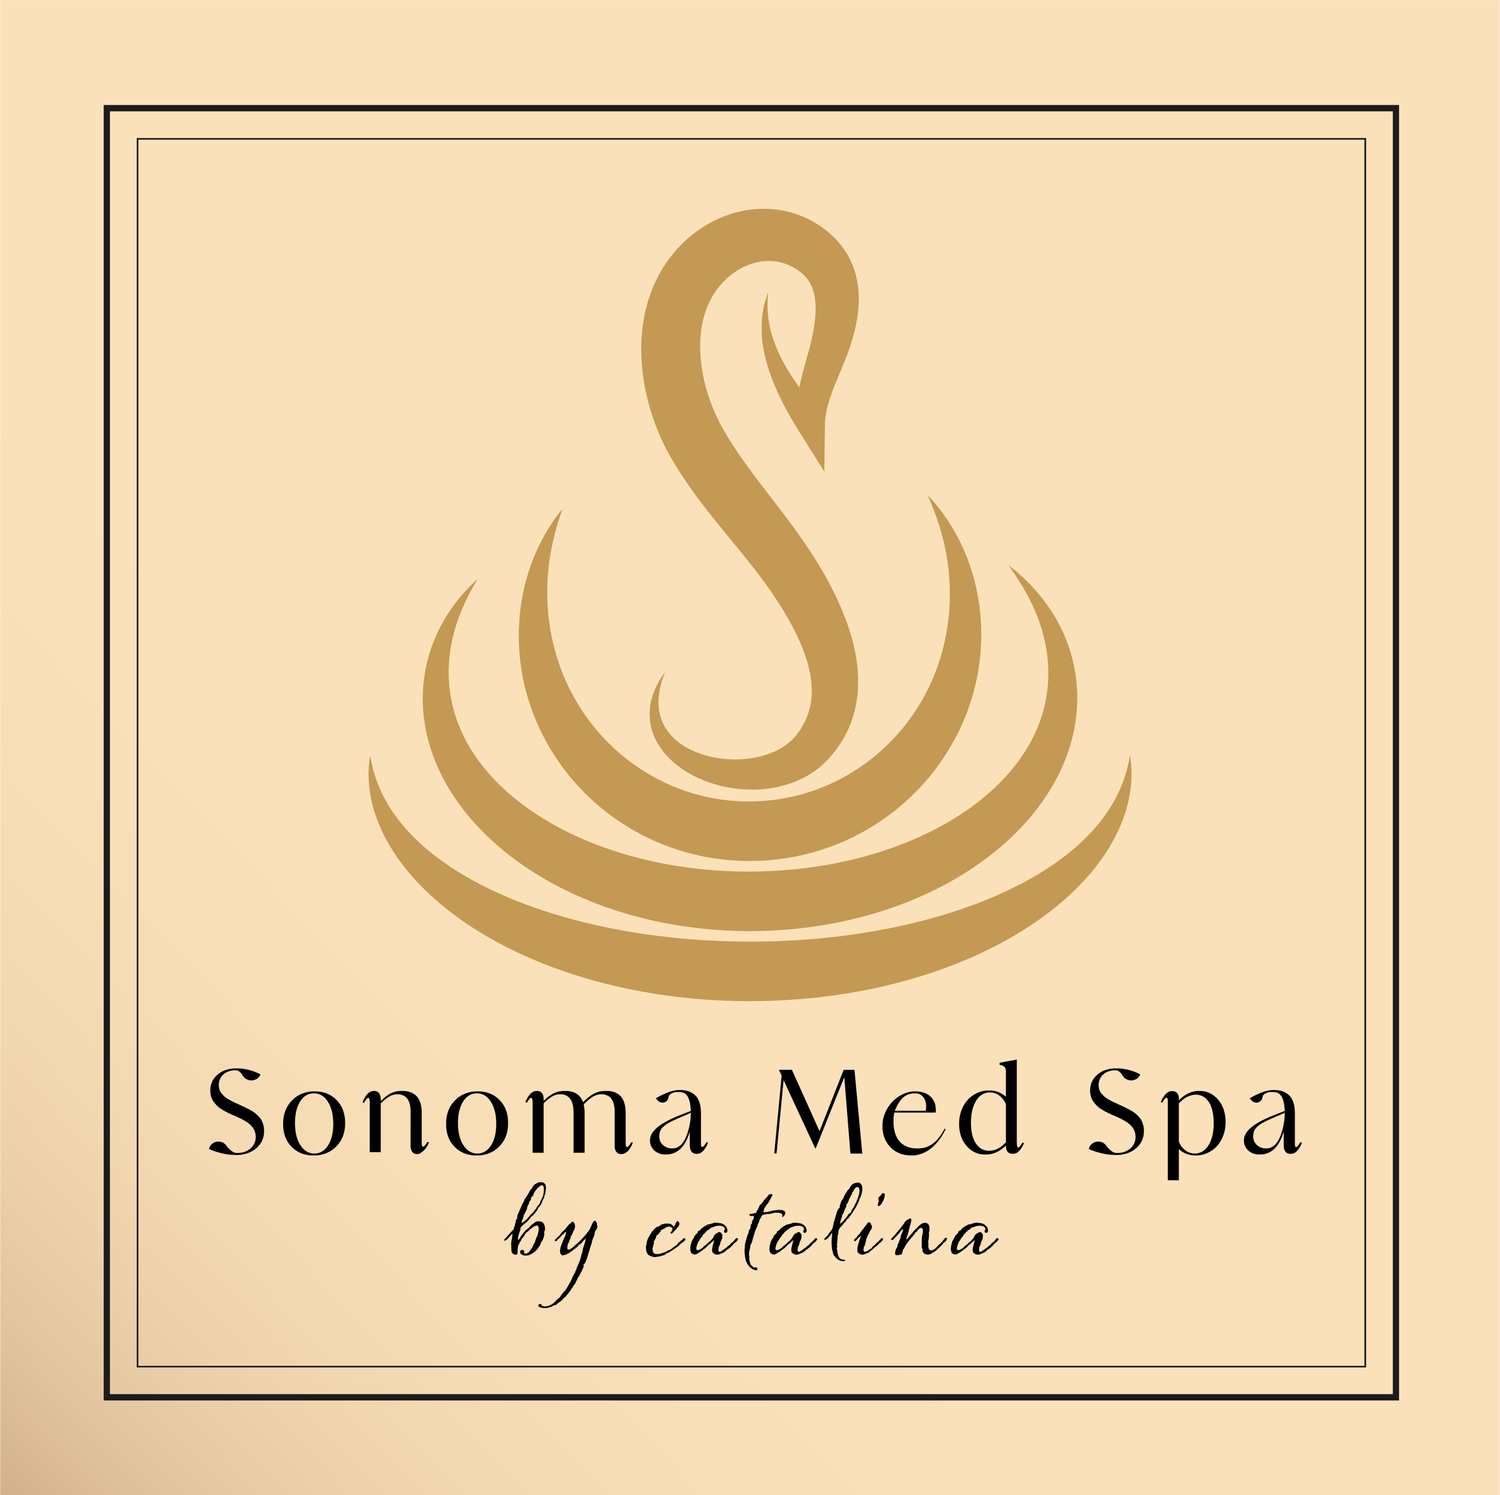 Sonoma Med Spa by Catalina